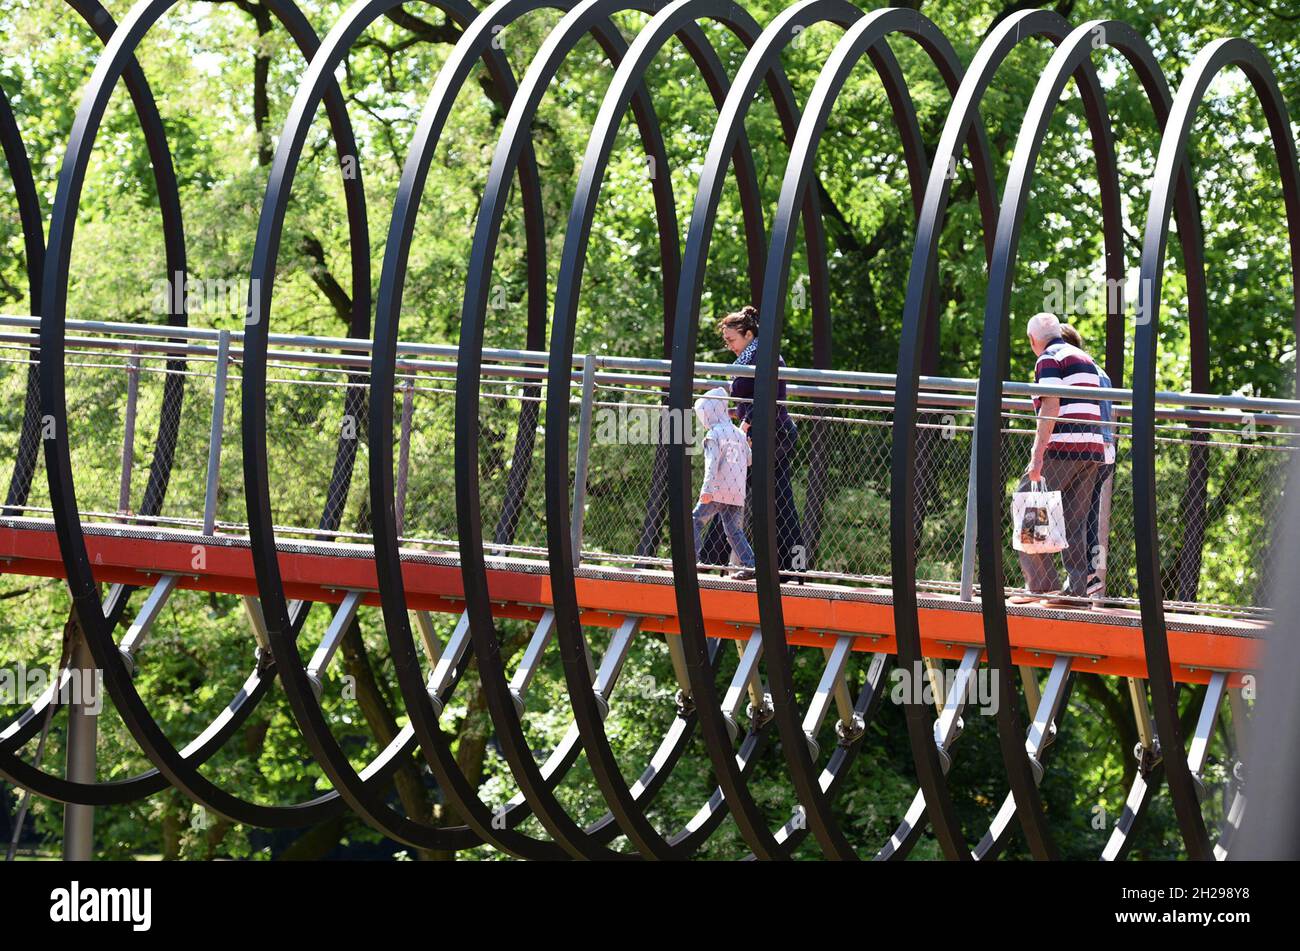 Slinky Springs to Fame, Brücke über den Rhein-Herne-Kanal in Oberhausen, Deutschland - Slinky Springs to Fame, bridge over the Rhine-Herne Canal in Ob Stock Photo